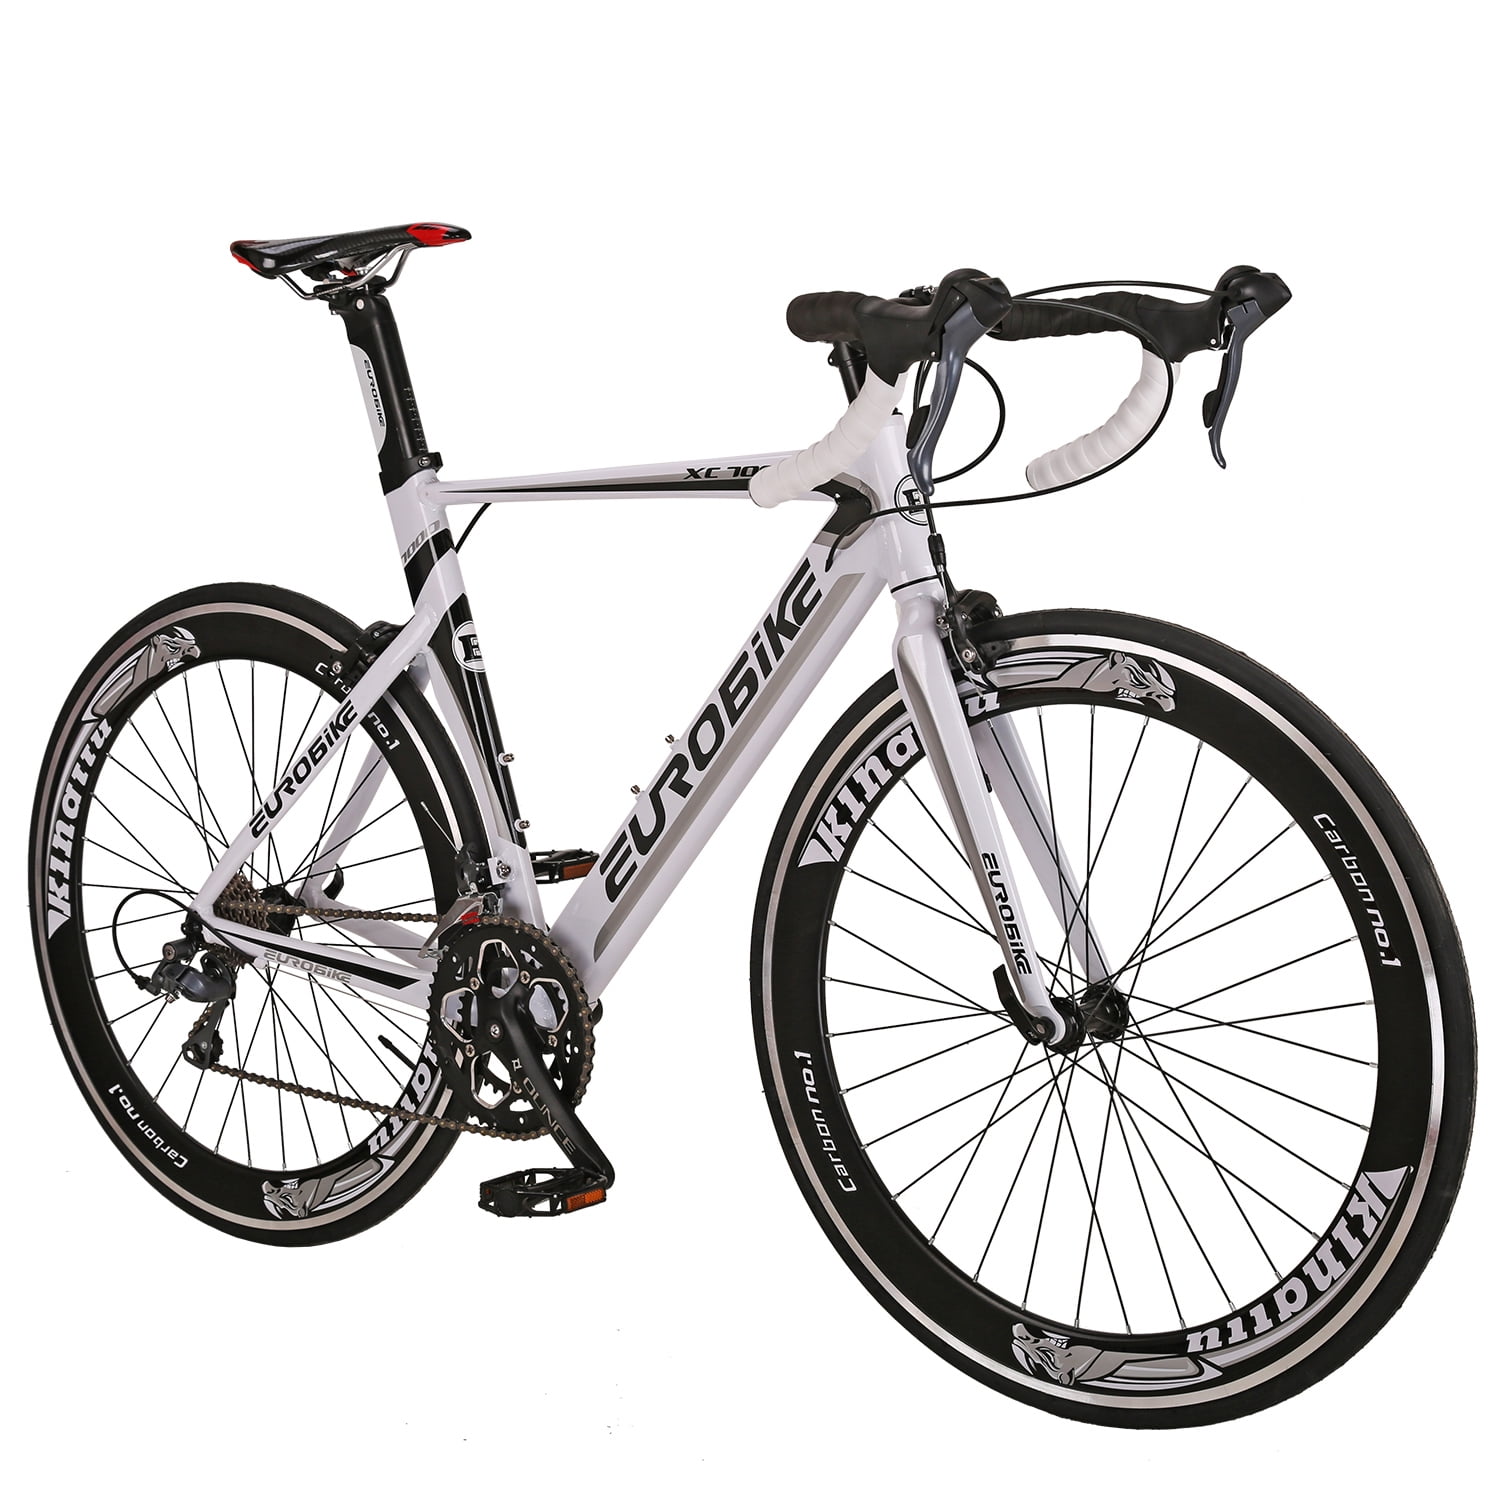  EUROBIKE Bicicleta de carretera para hombres adultos, XC7000,  bicicleta de carretera de aluminio ligera para mujeres, bicicleta de  carreras Shimano14 Speed 700C, marco de aluminio de 21.3 in (blanco-XC7000)  : Deportes